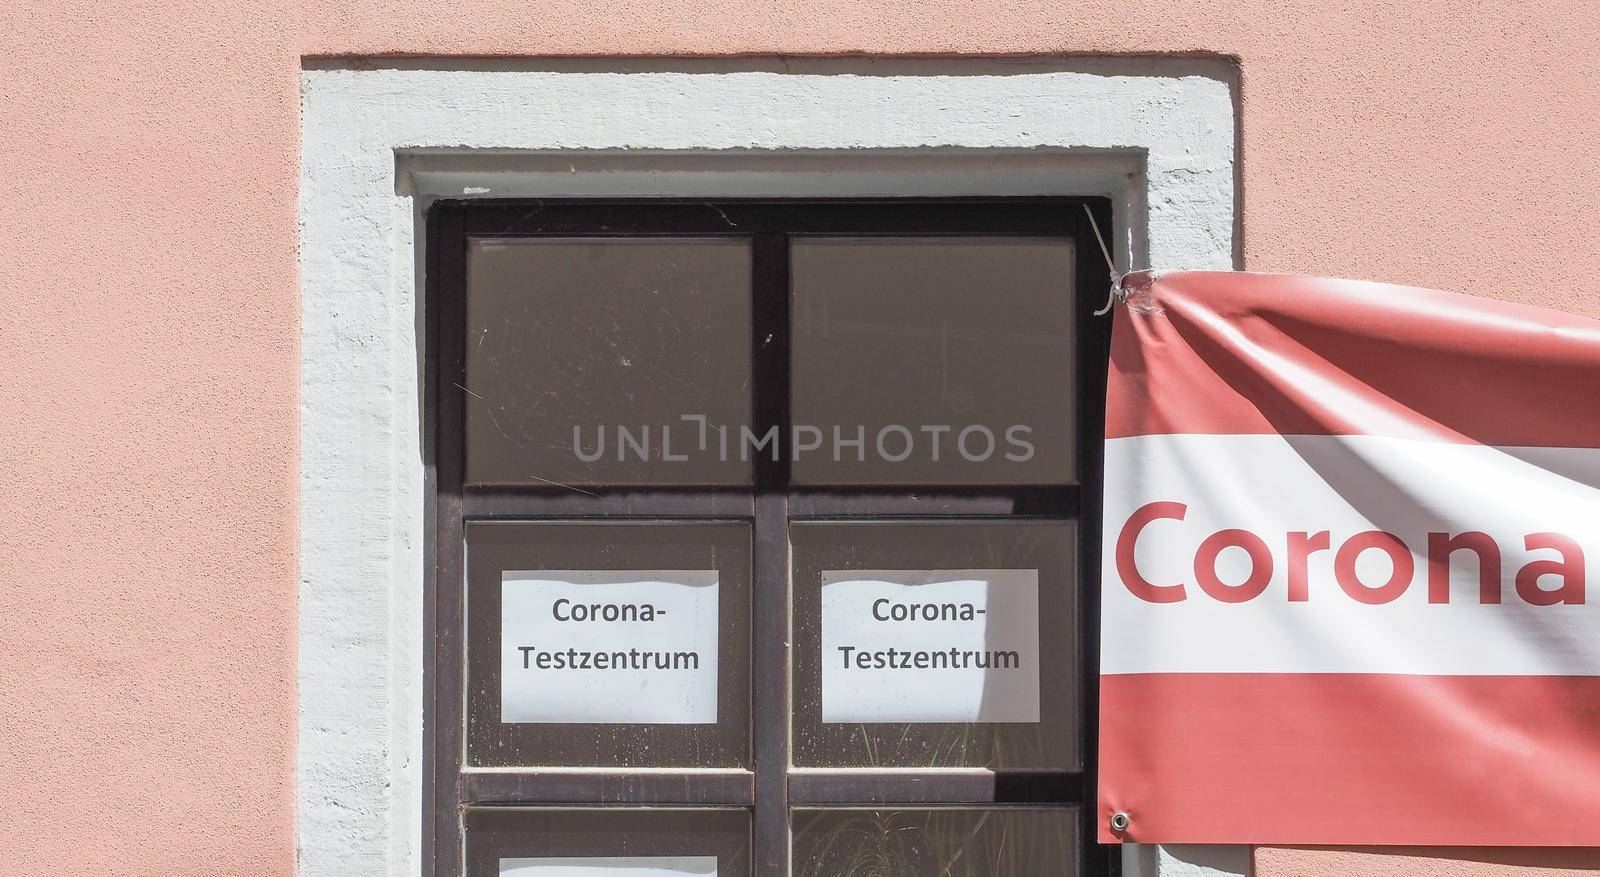 Corona Testzentrum translation Covid Test Centre in Nuernberg, Germany